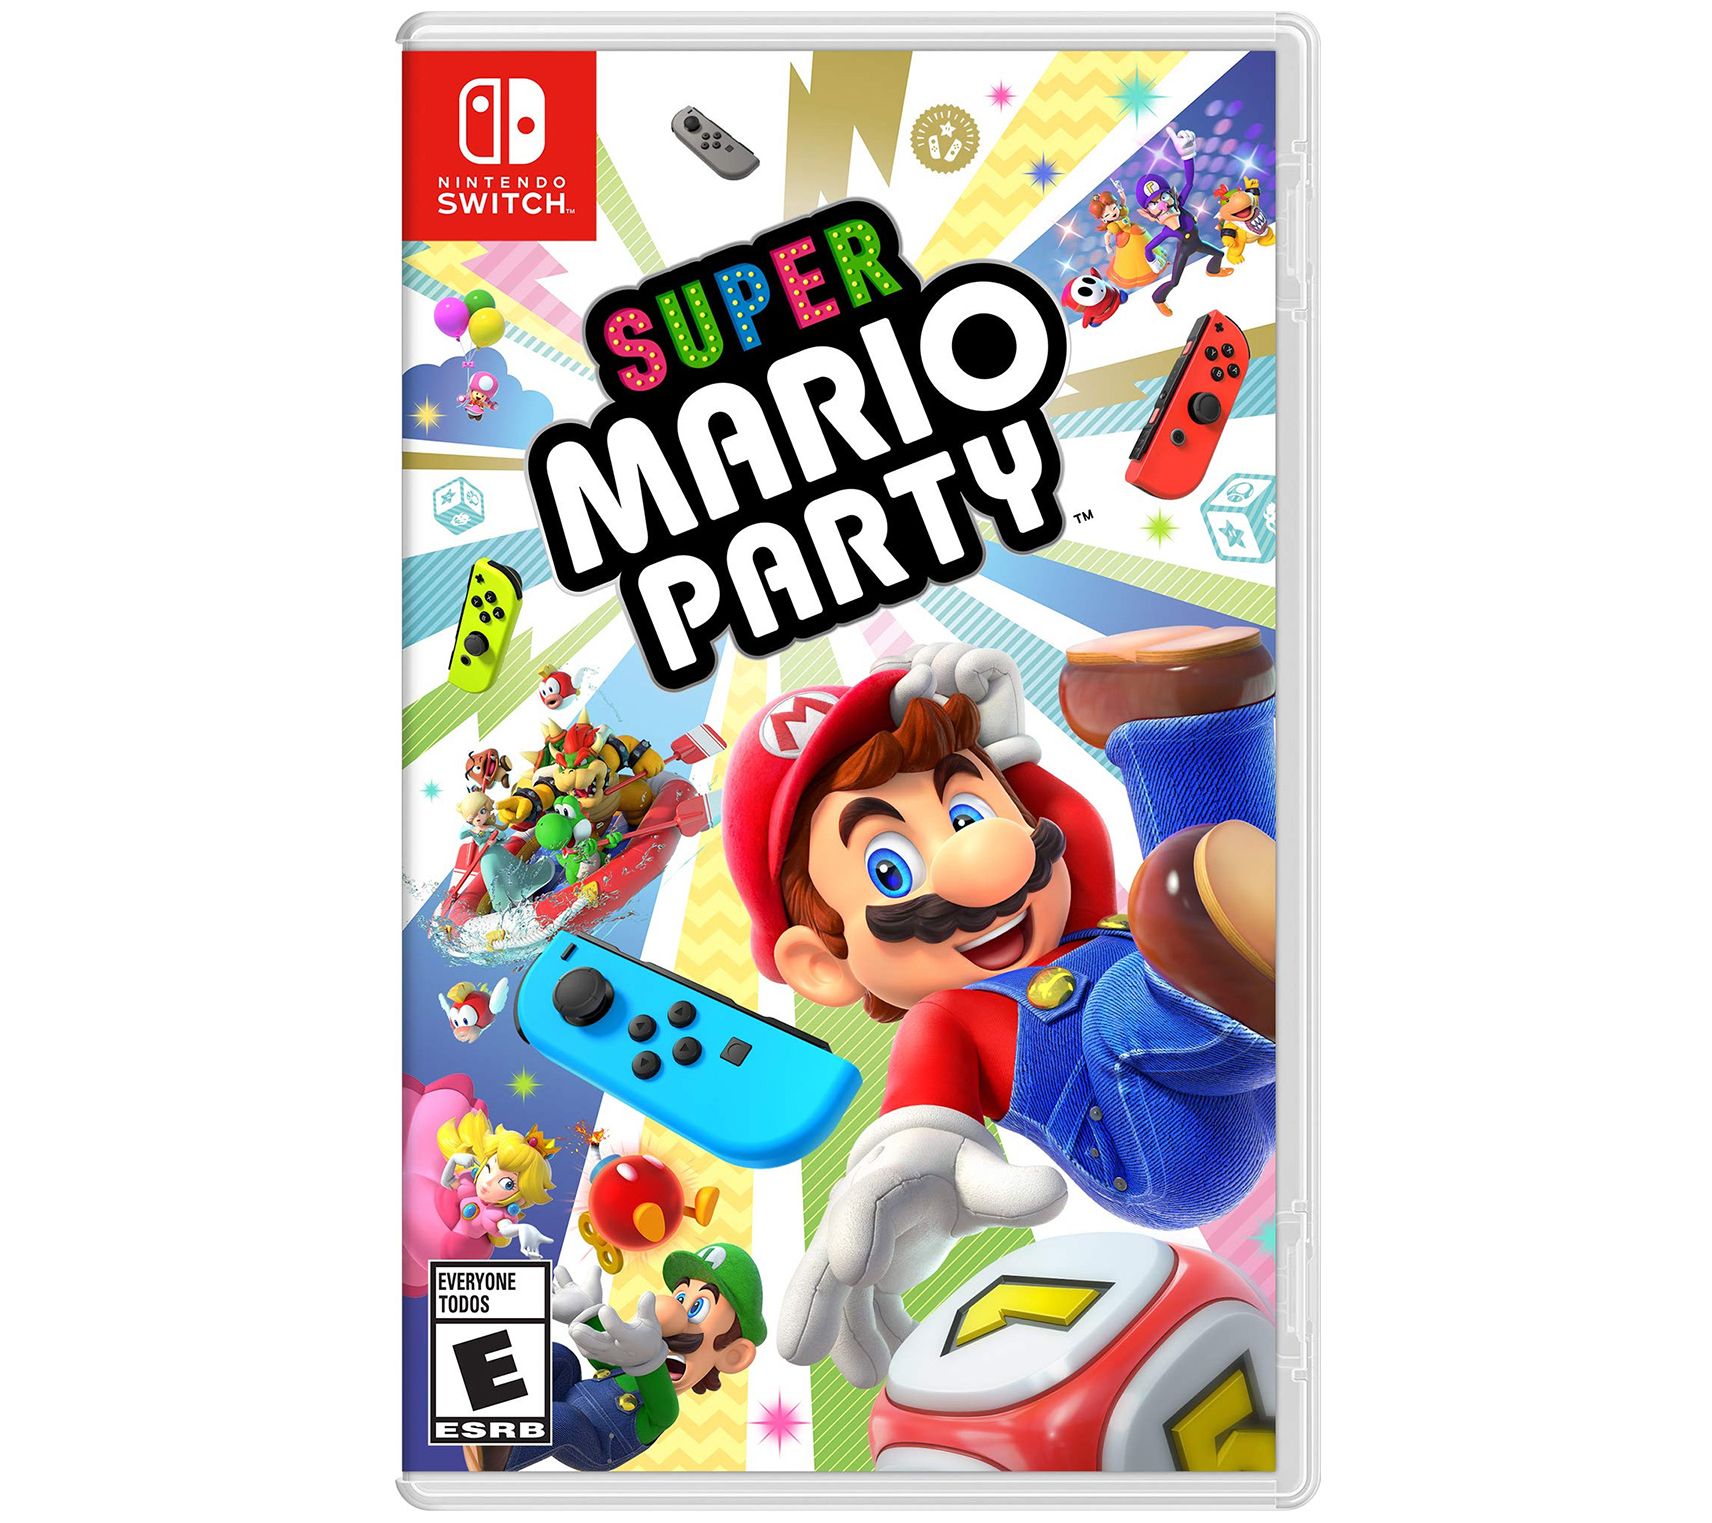  Mario Golf: Super Rush - Nintendo Switch : Nintendo of America:  Everything Else